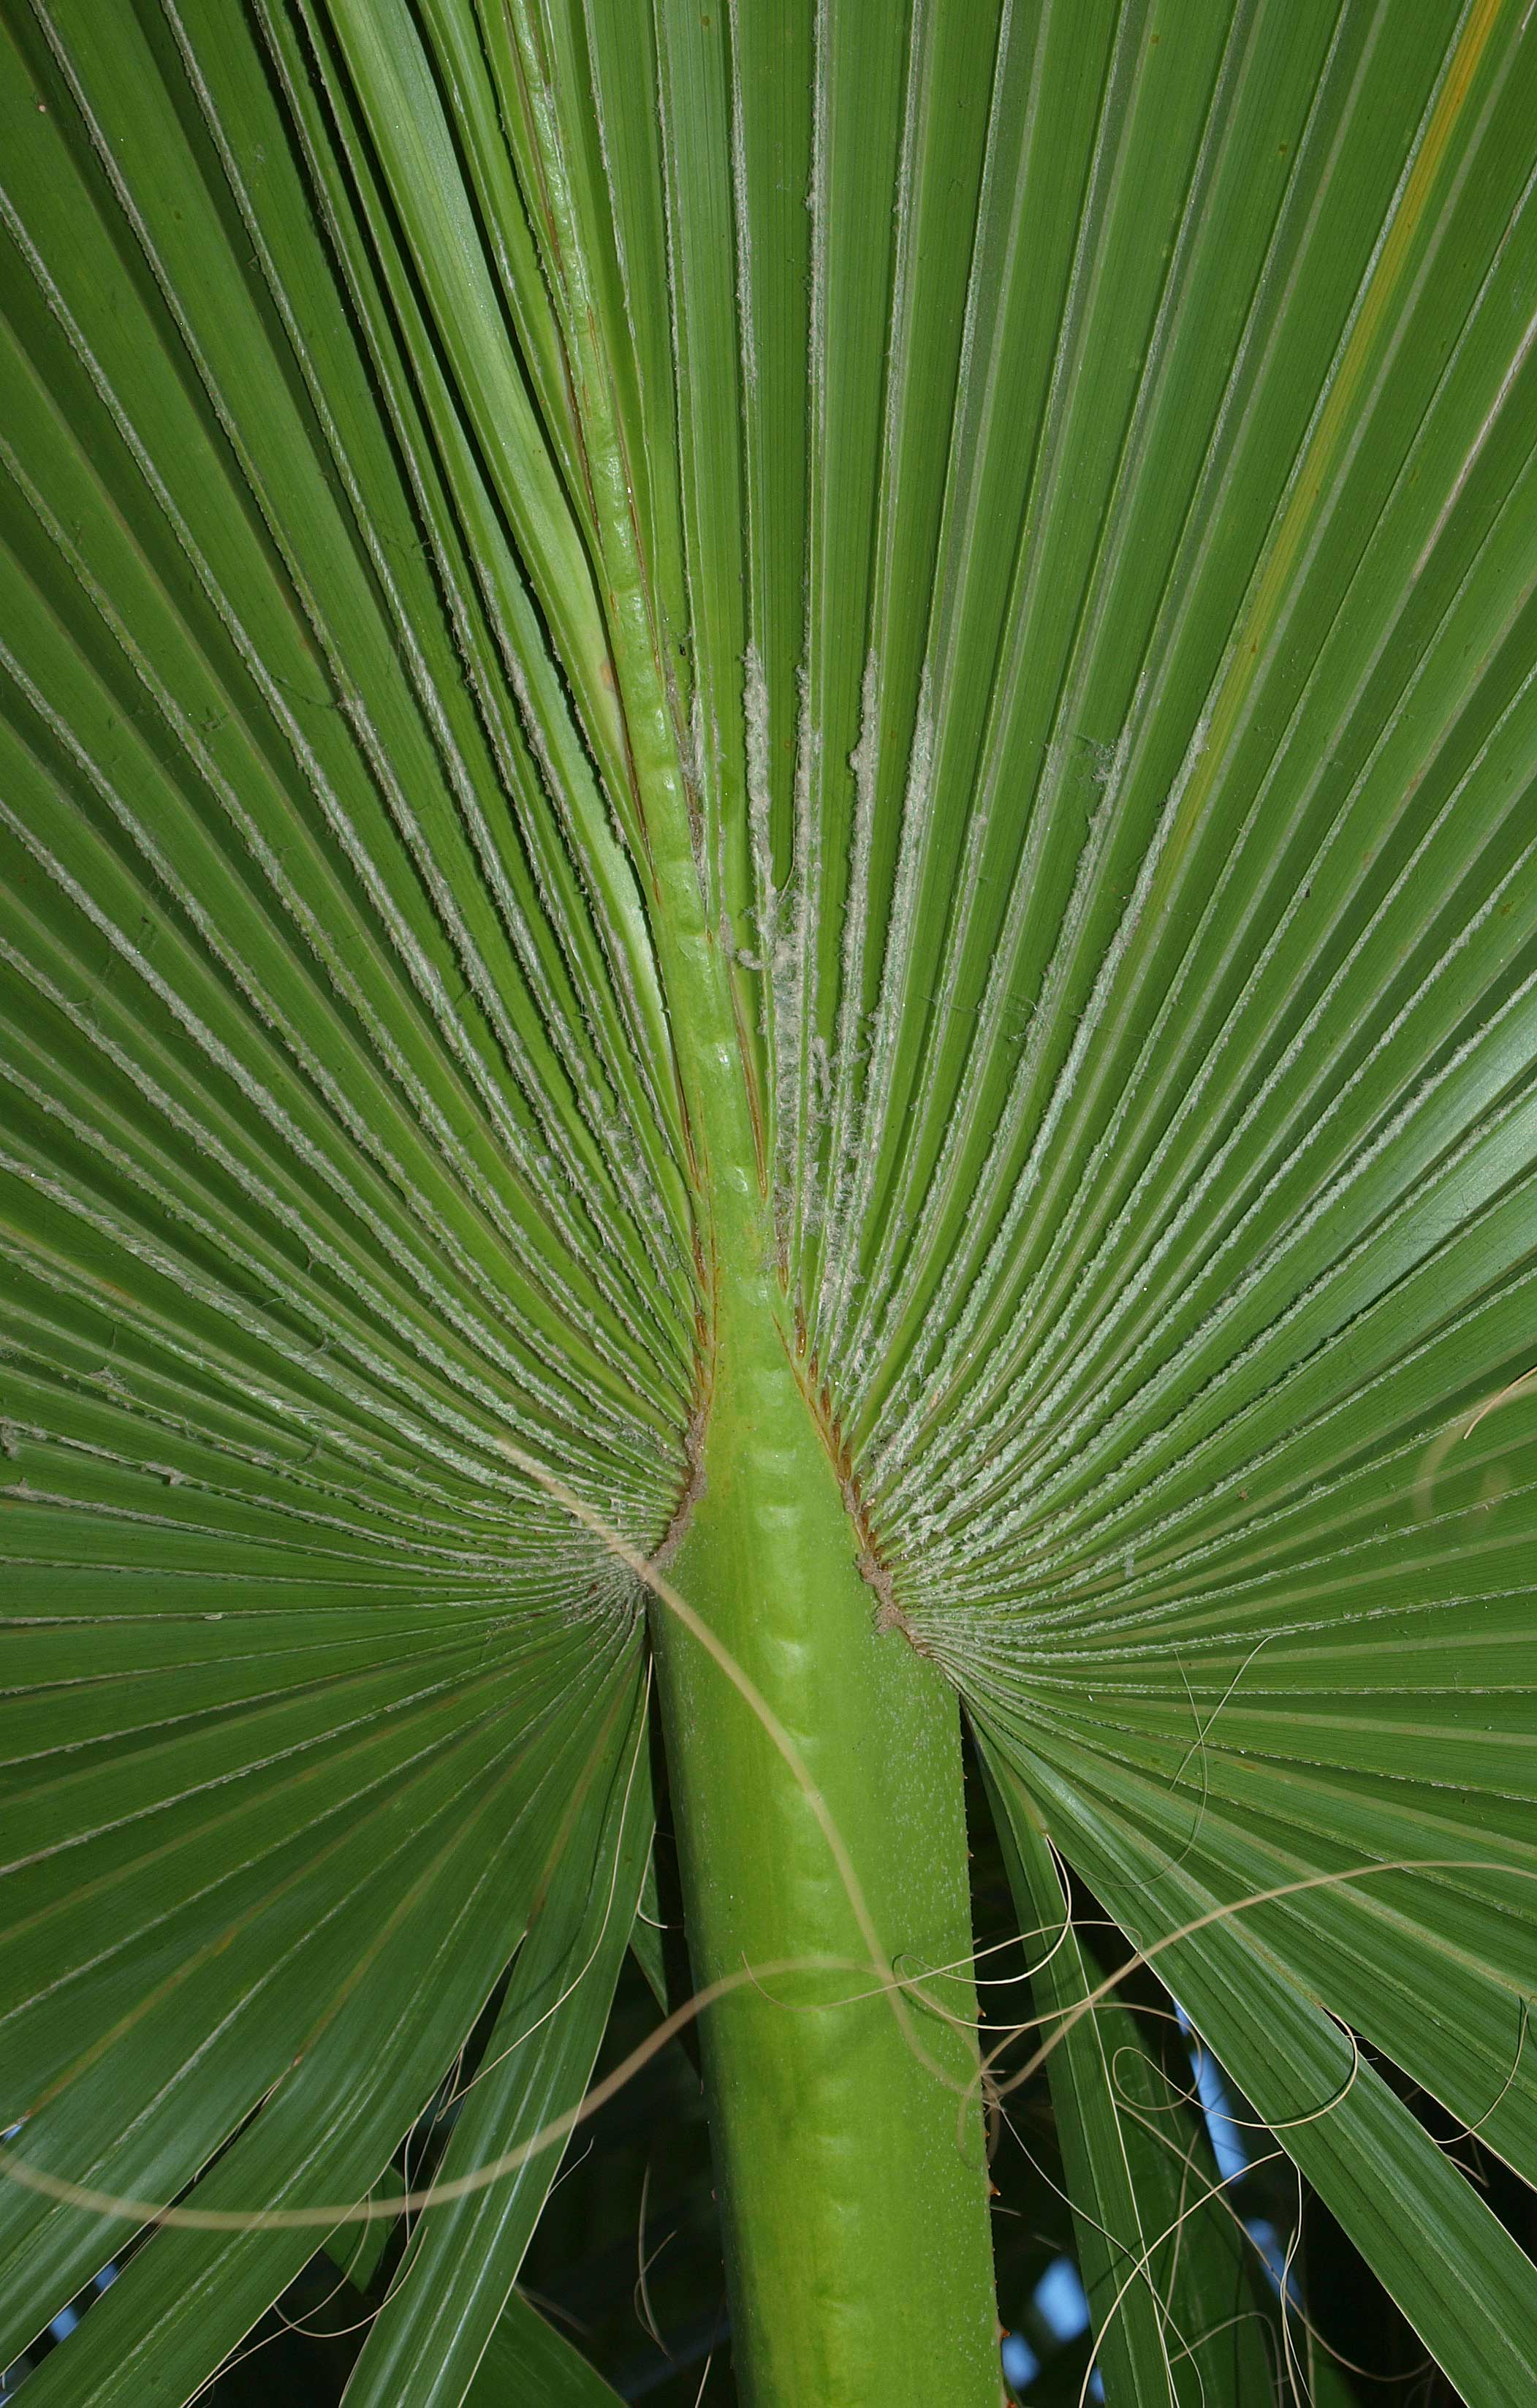   Washingtonia filifera  underside of leaf from young palm 